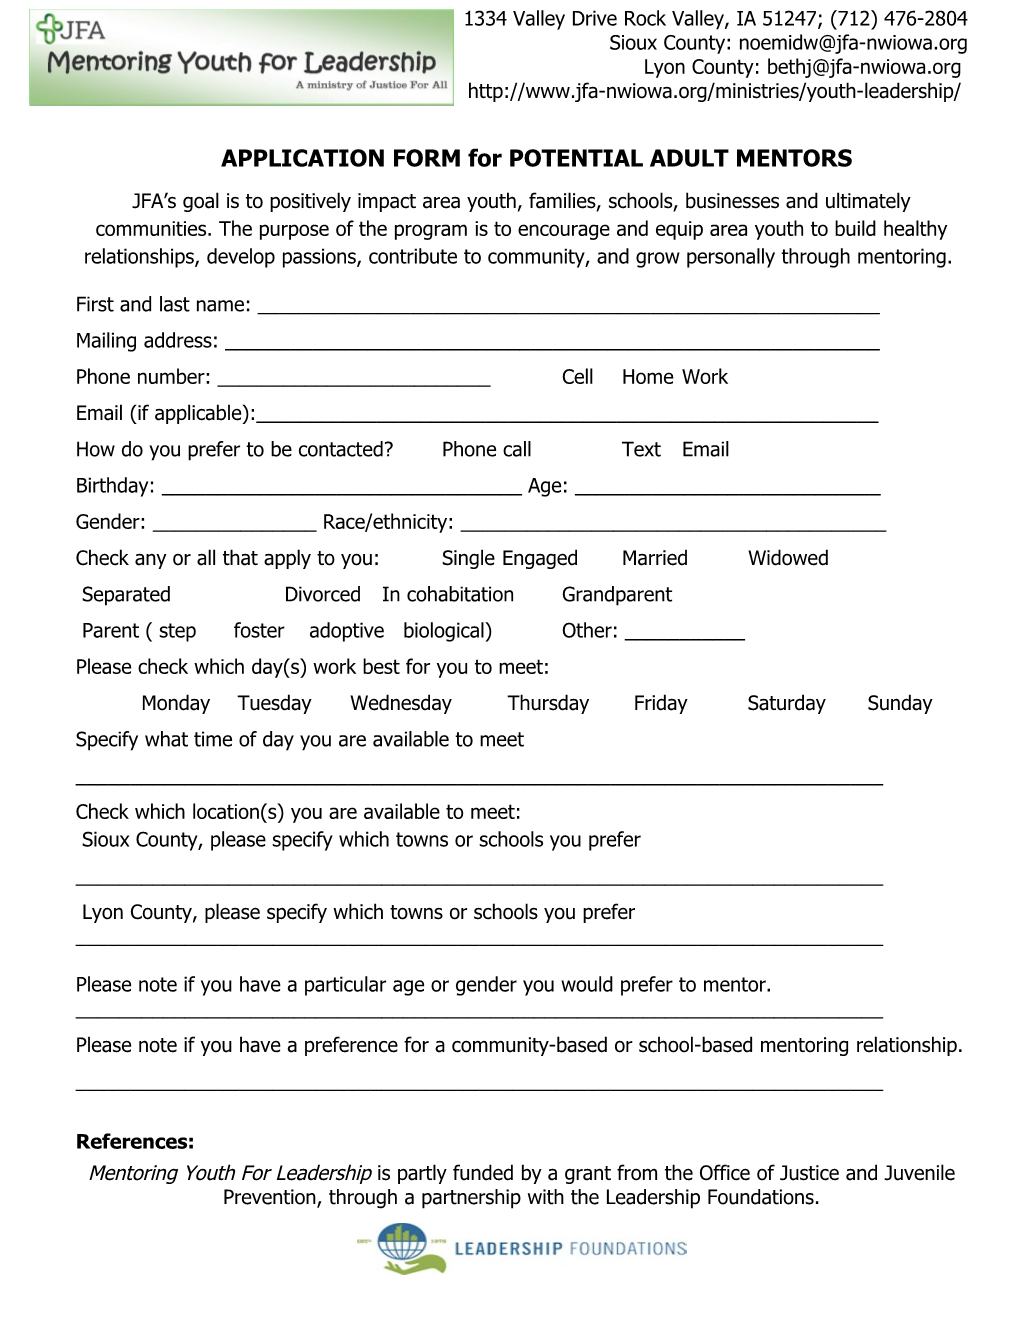 APPLICATION FORM for POTENTIAL ADULT MENTORS